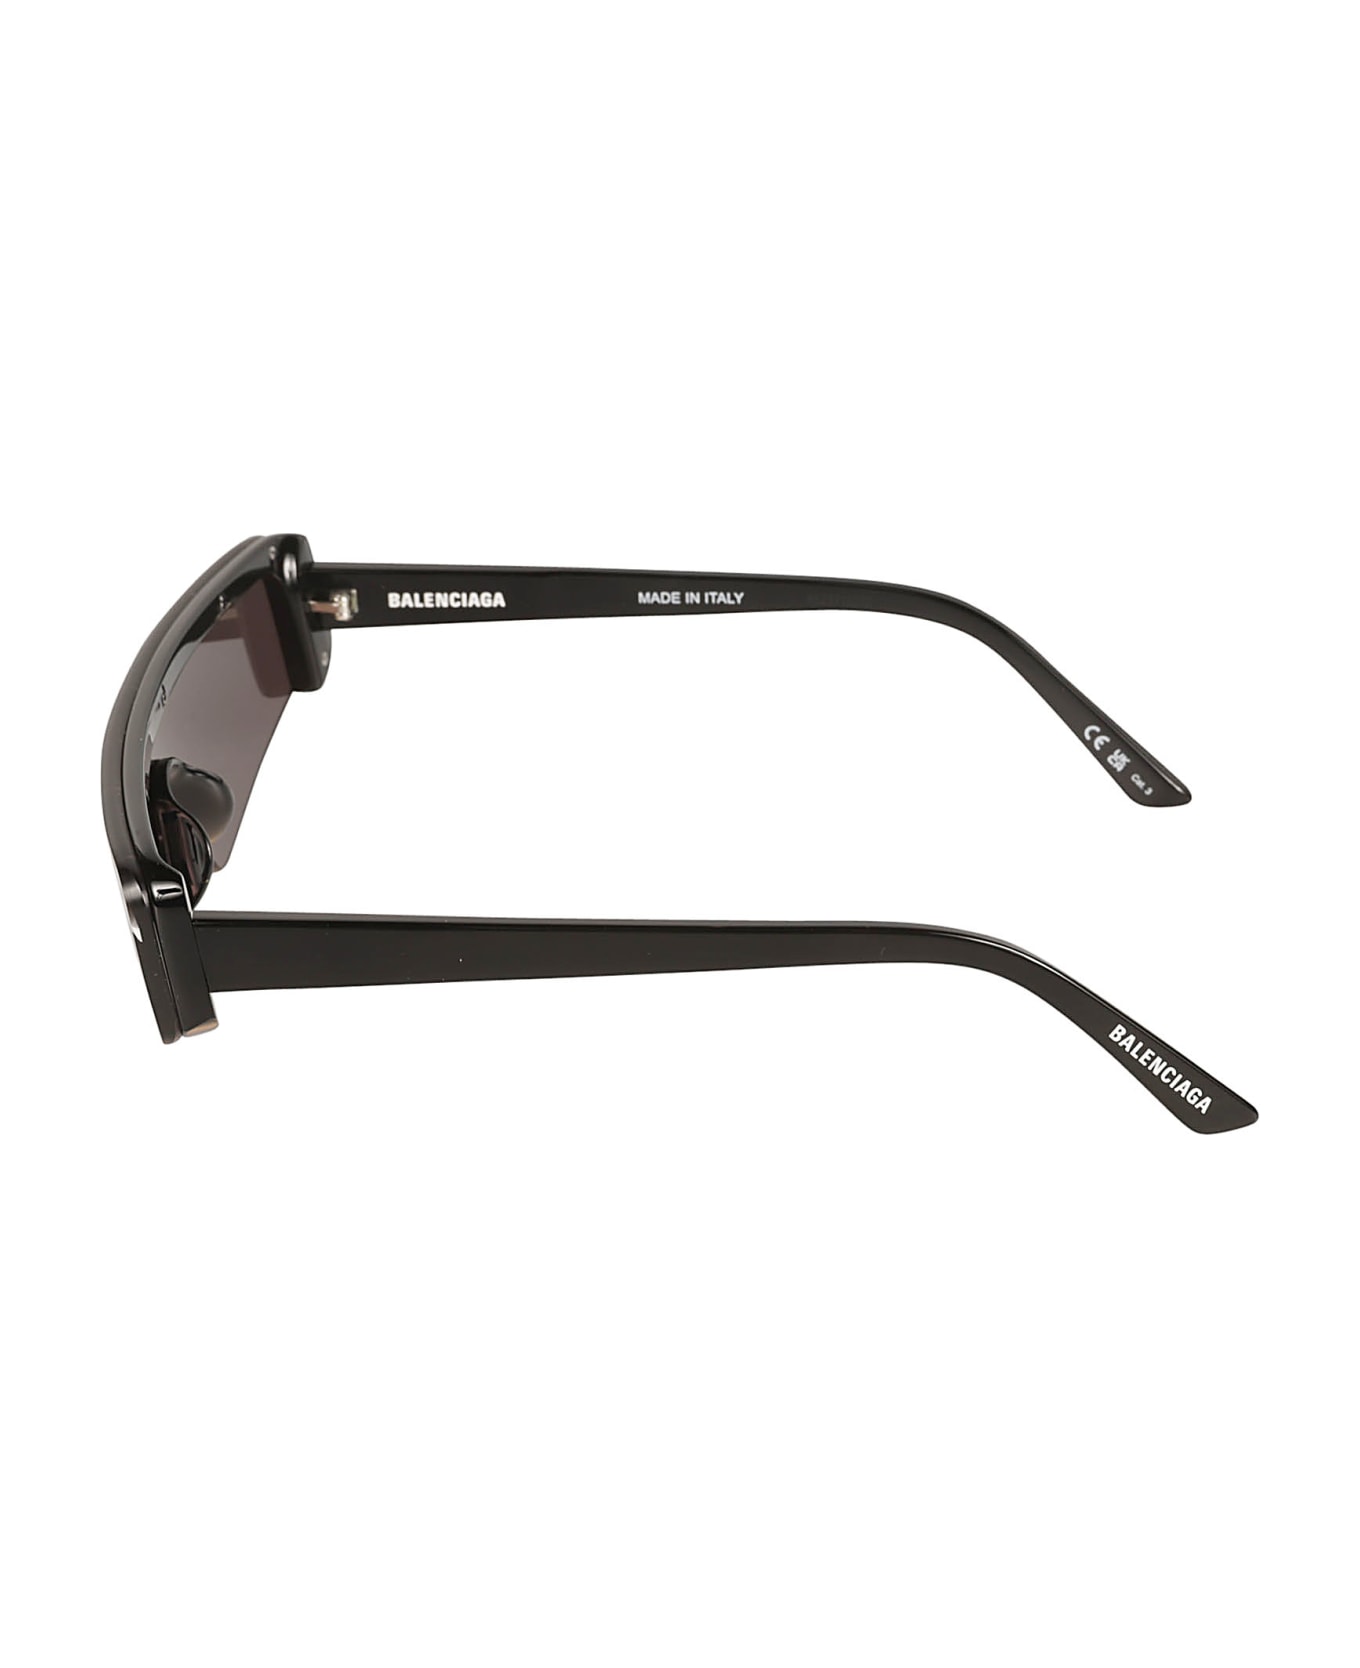 Balenciaga Eyewear Ski-style Sunglasses - Black/Grey サングラス